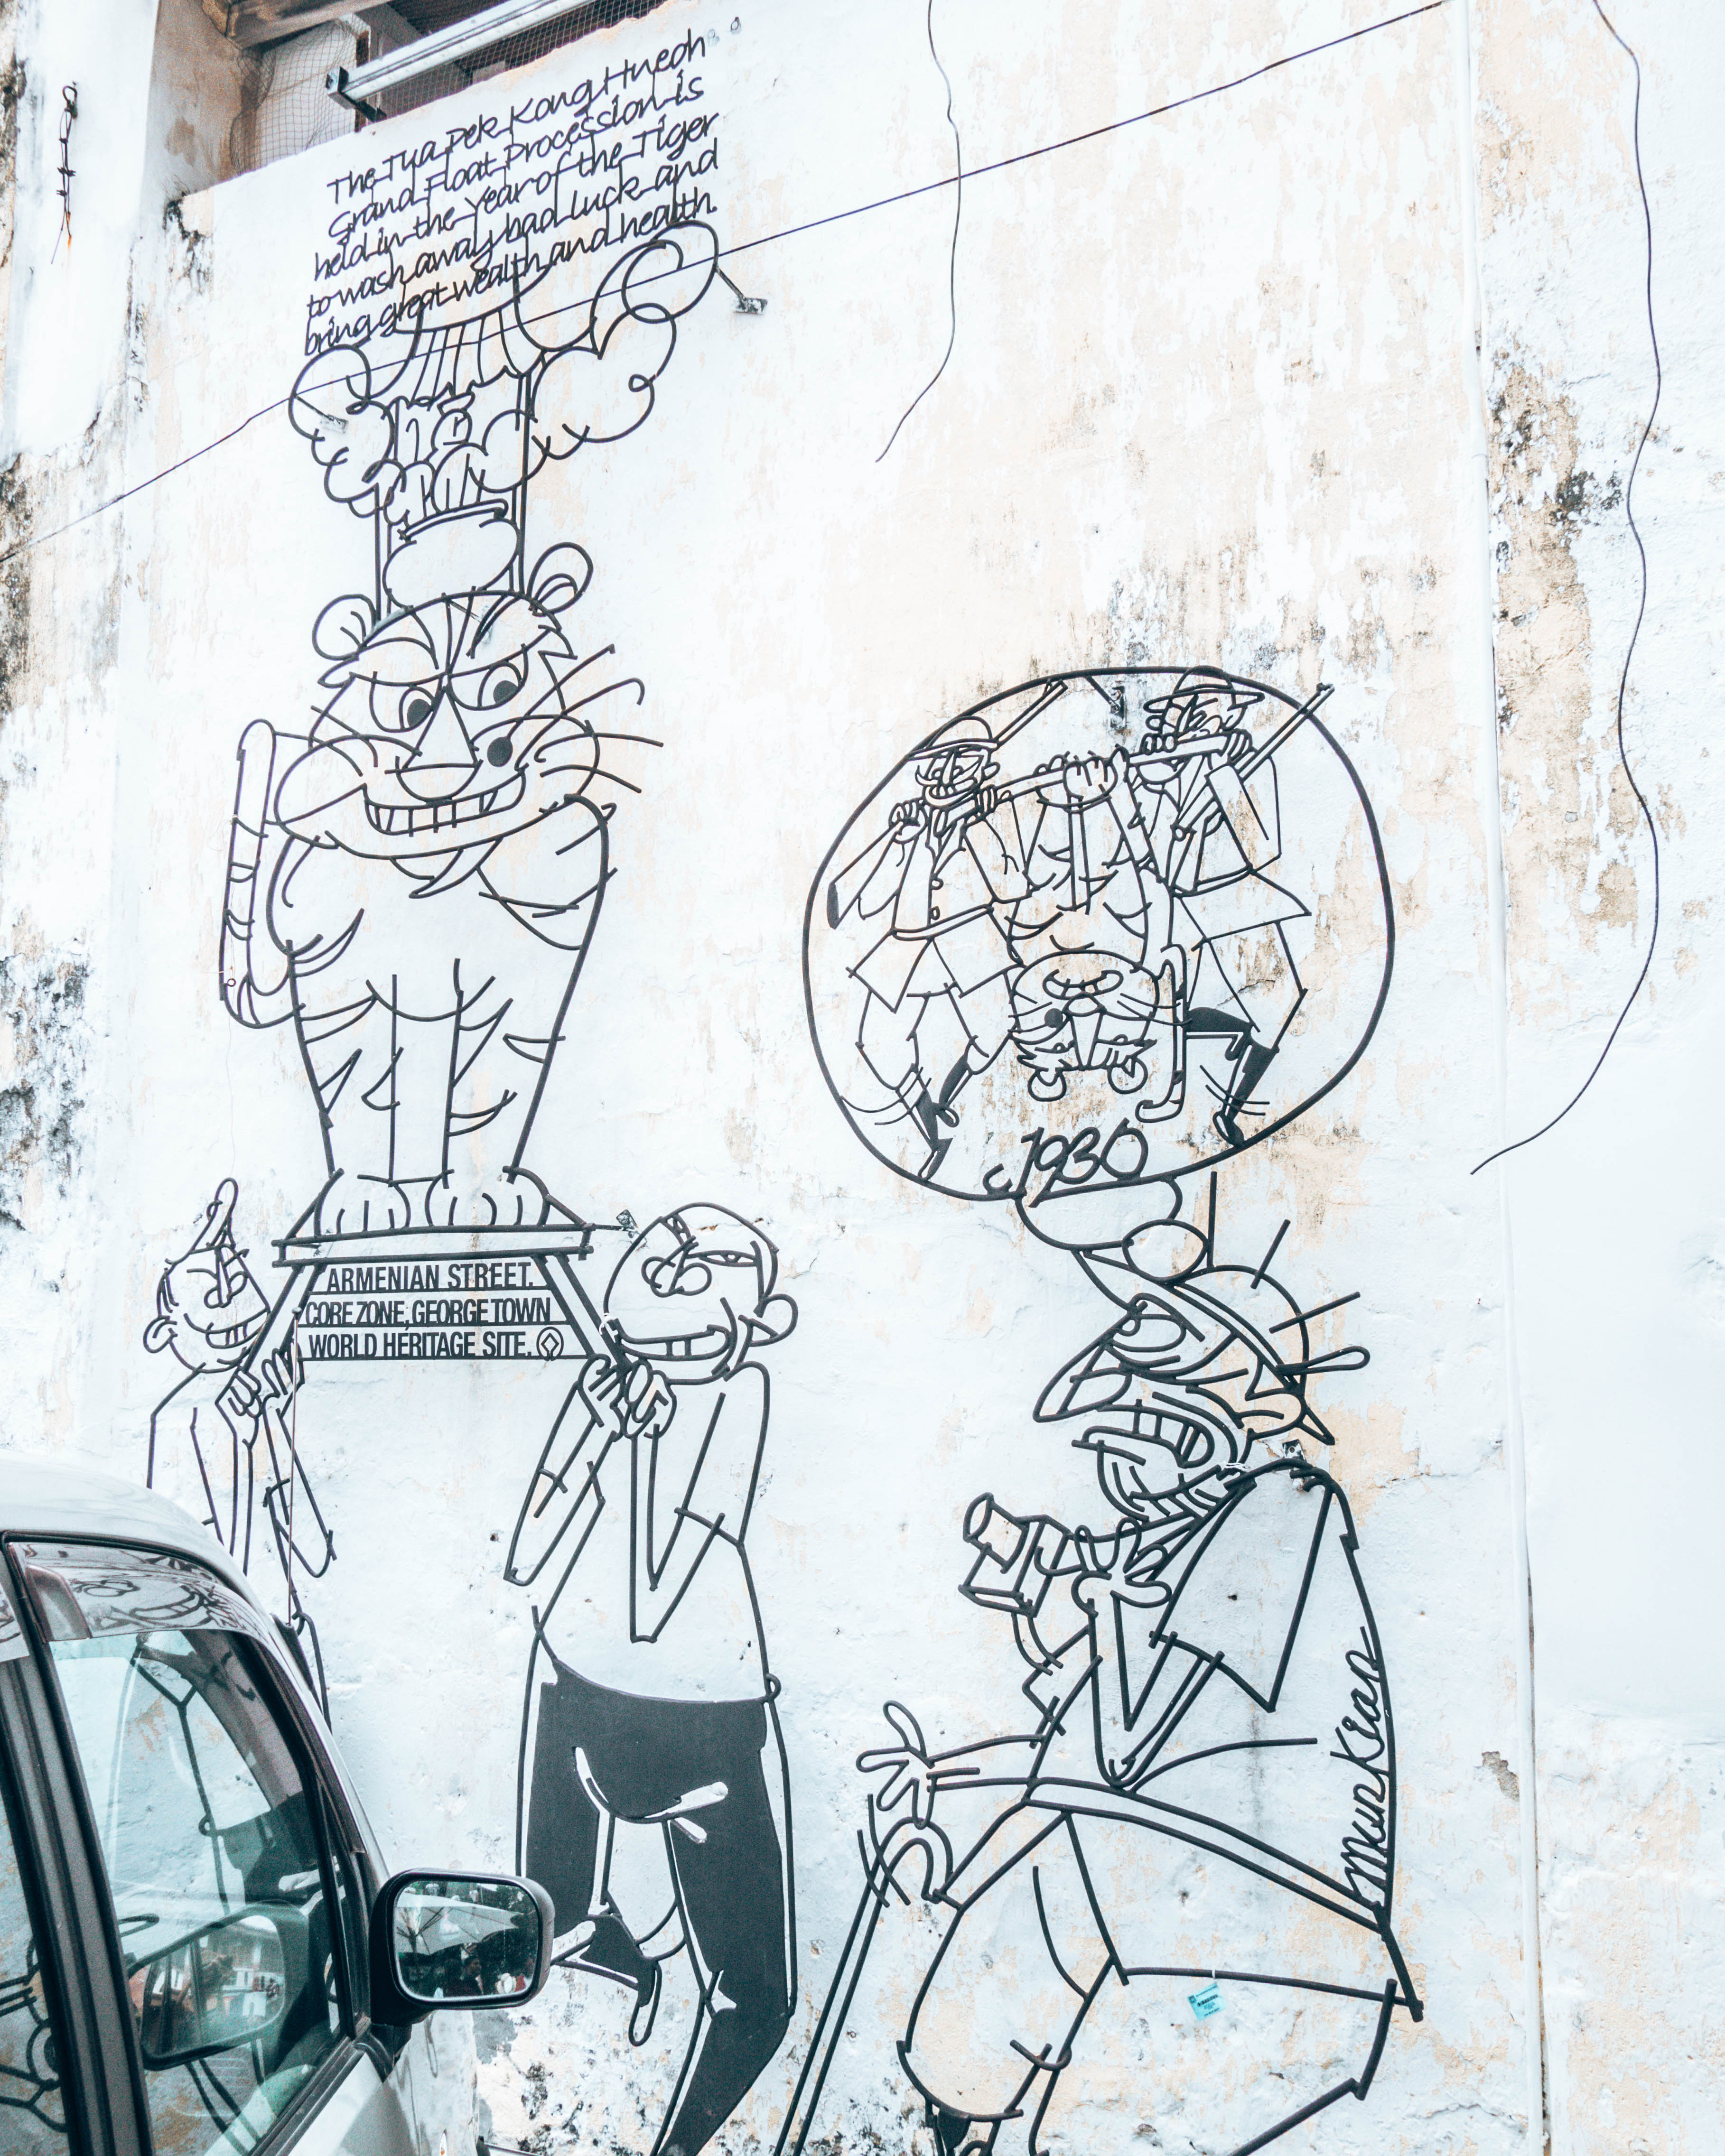 Voice of the people by Tang Mun Kian. Street art in Penang, Georgetown, Malaysia - Wediditourway.com